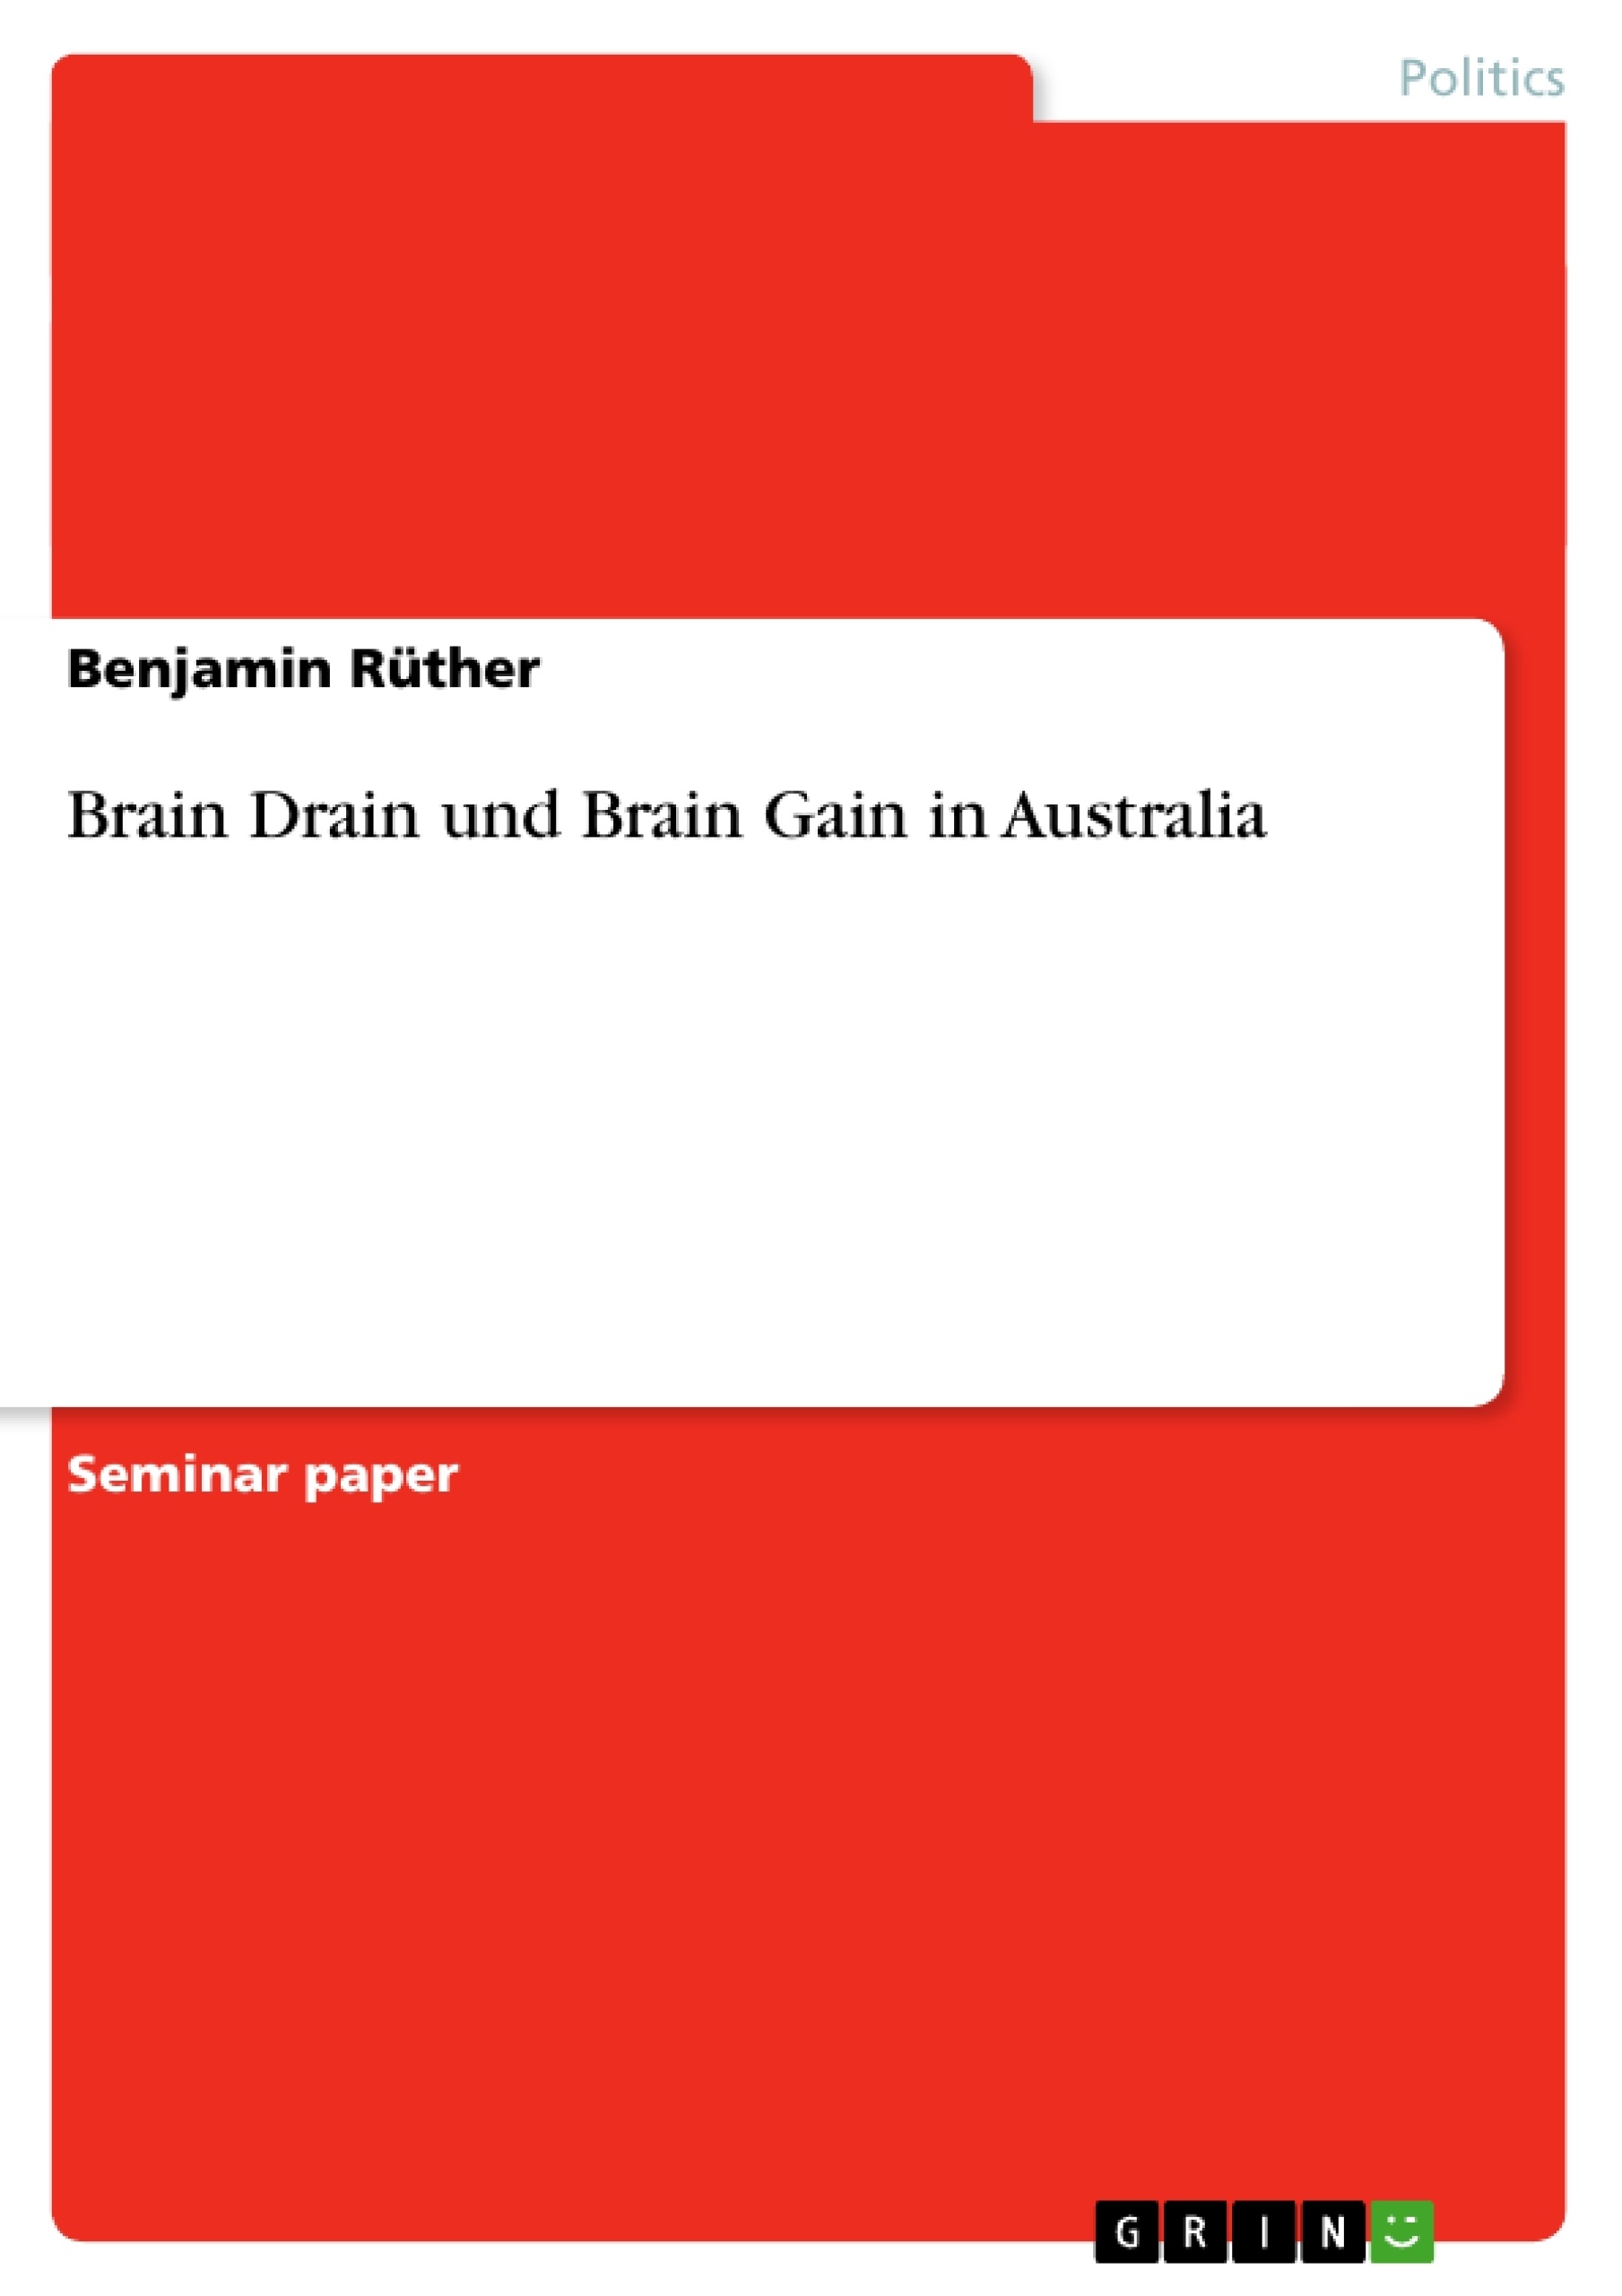 Título: Brain Drain und Brain Gain in Australia